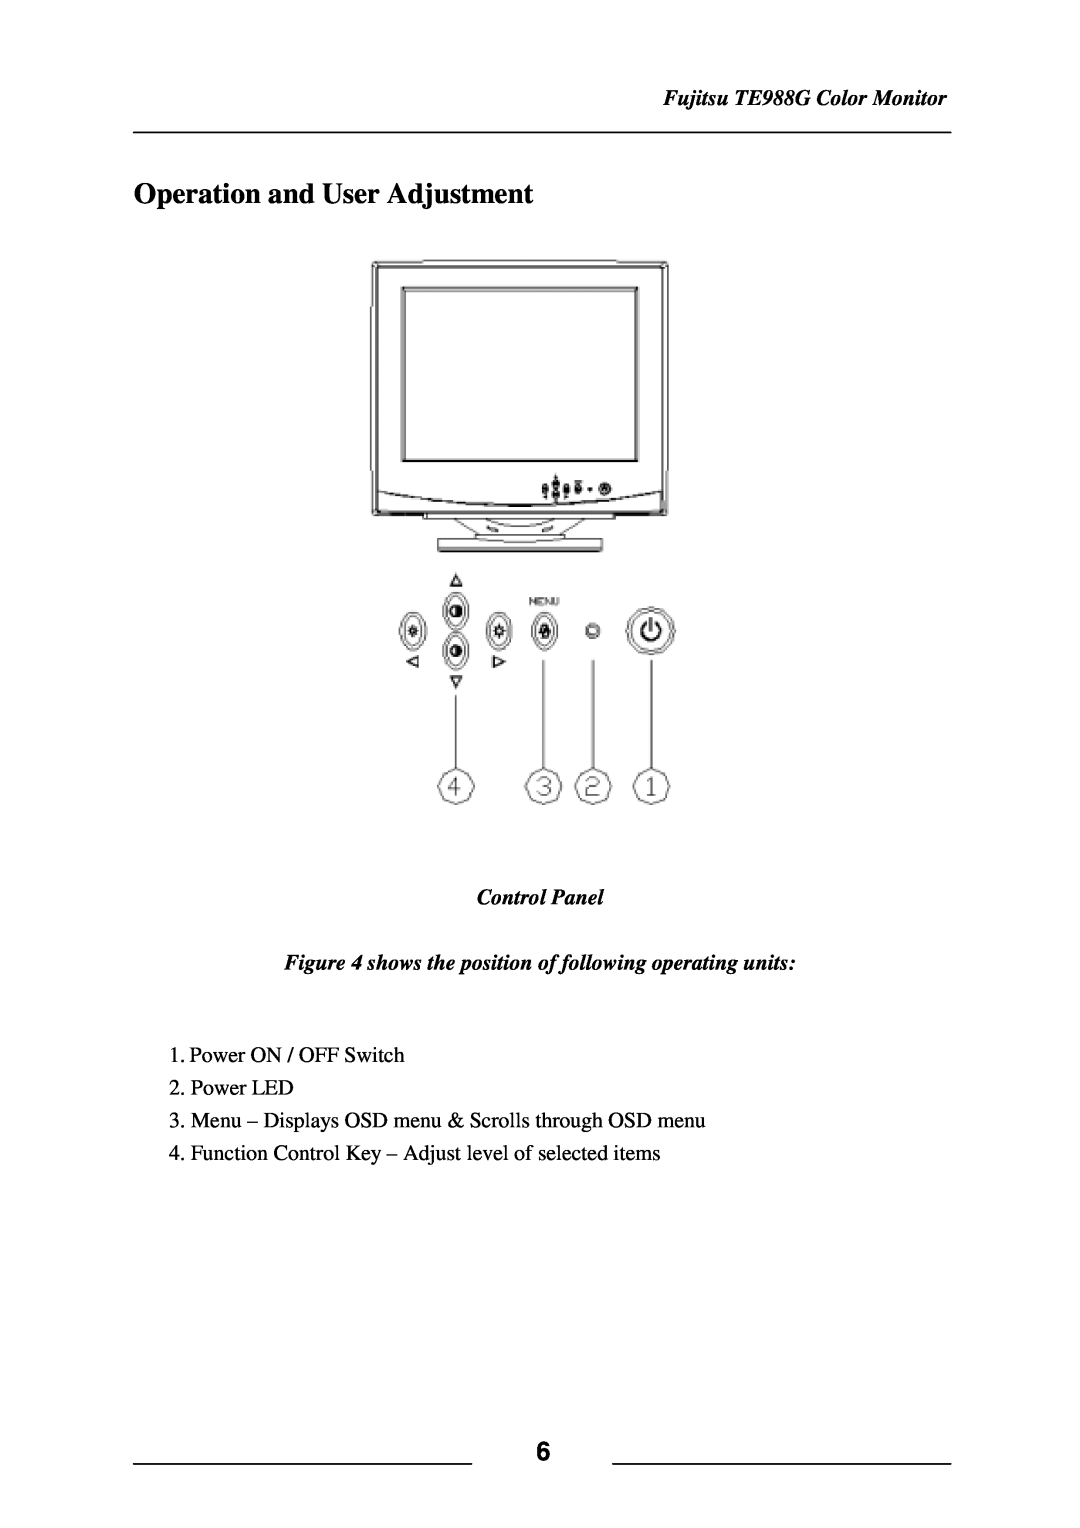 Fujitsu Operation and User Adjustment, Fujitsu TE988G Color Monitor, Control Panel, Power ON / OFF Switch 2. Power LED 